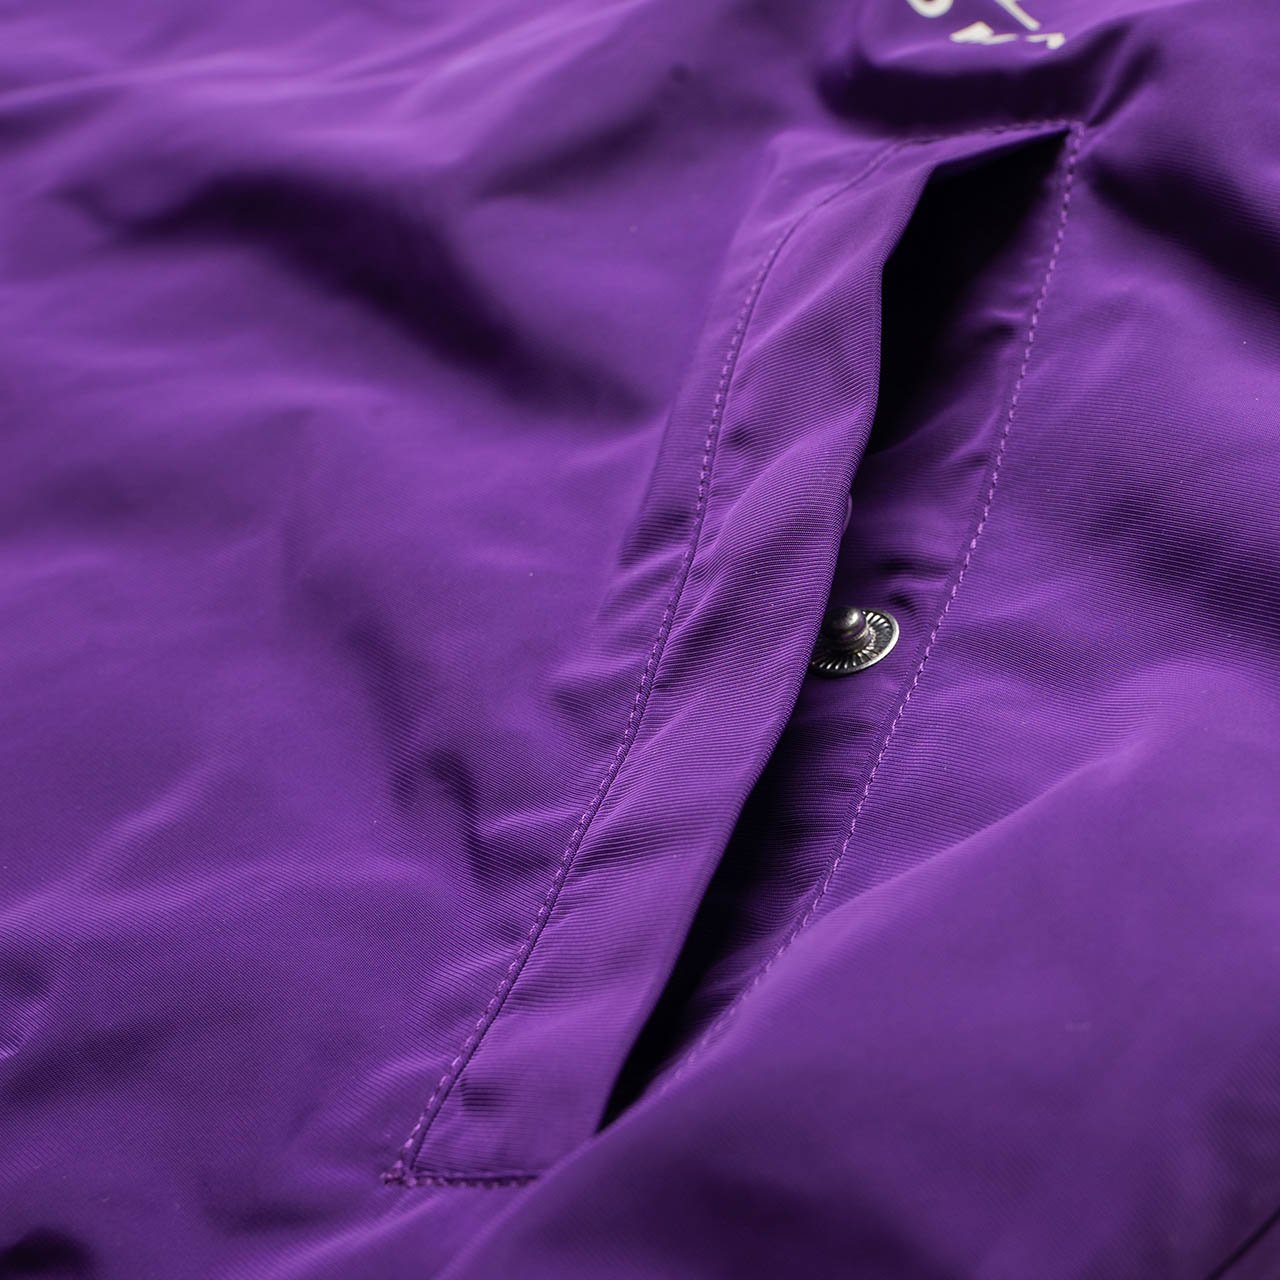 perks and mini waveform calm coach jacket (purple) - 39080-c-mprp - a.plus - Image - 6